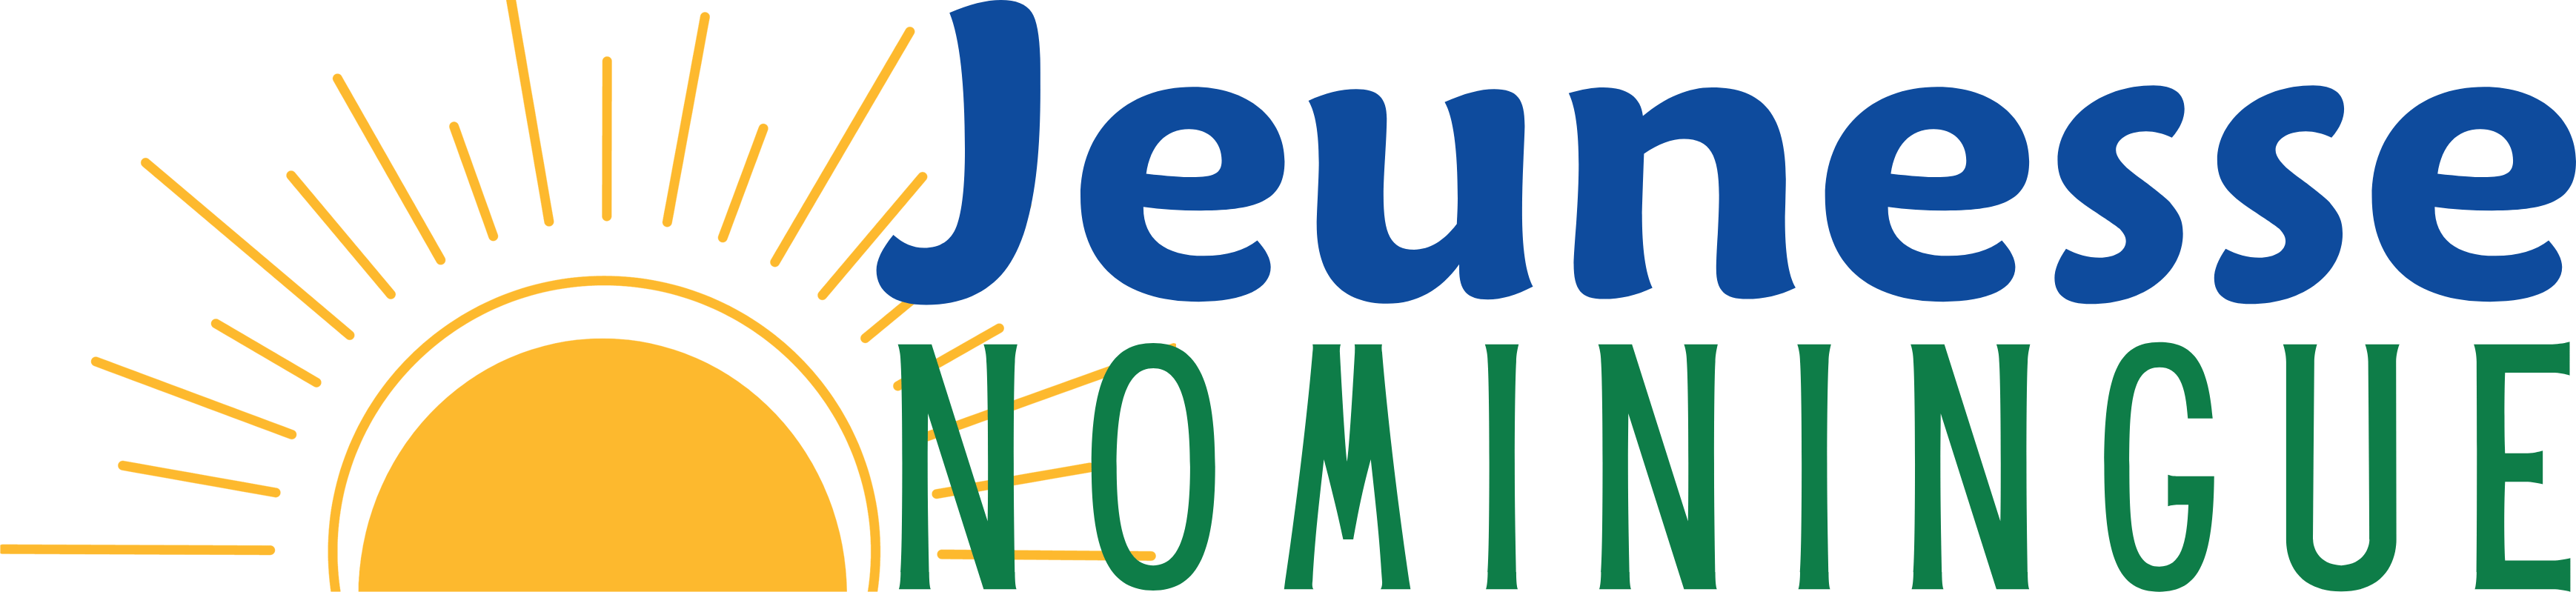 Logo Jeunesse Nominingue Horizontal